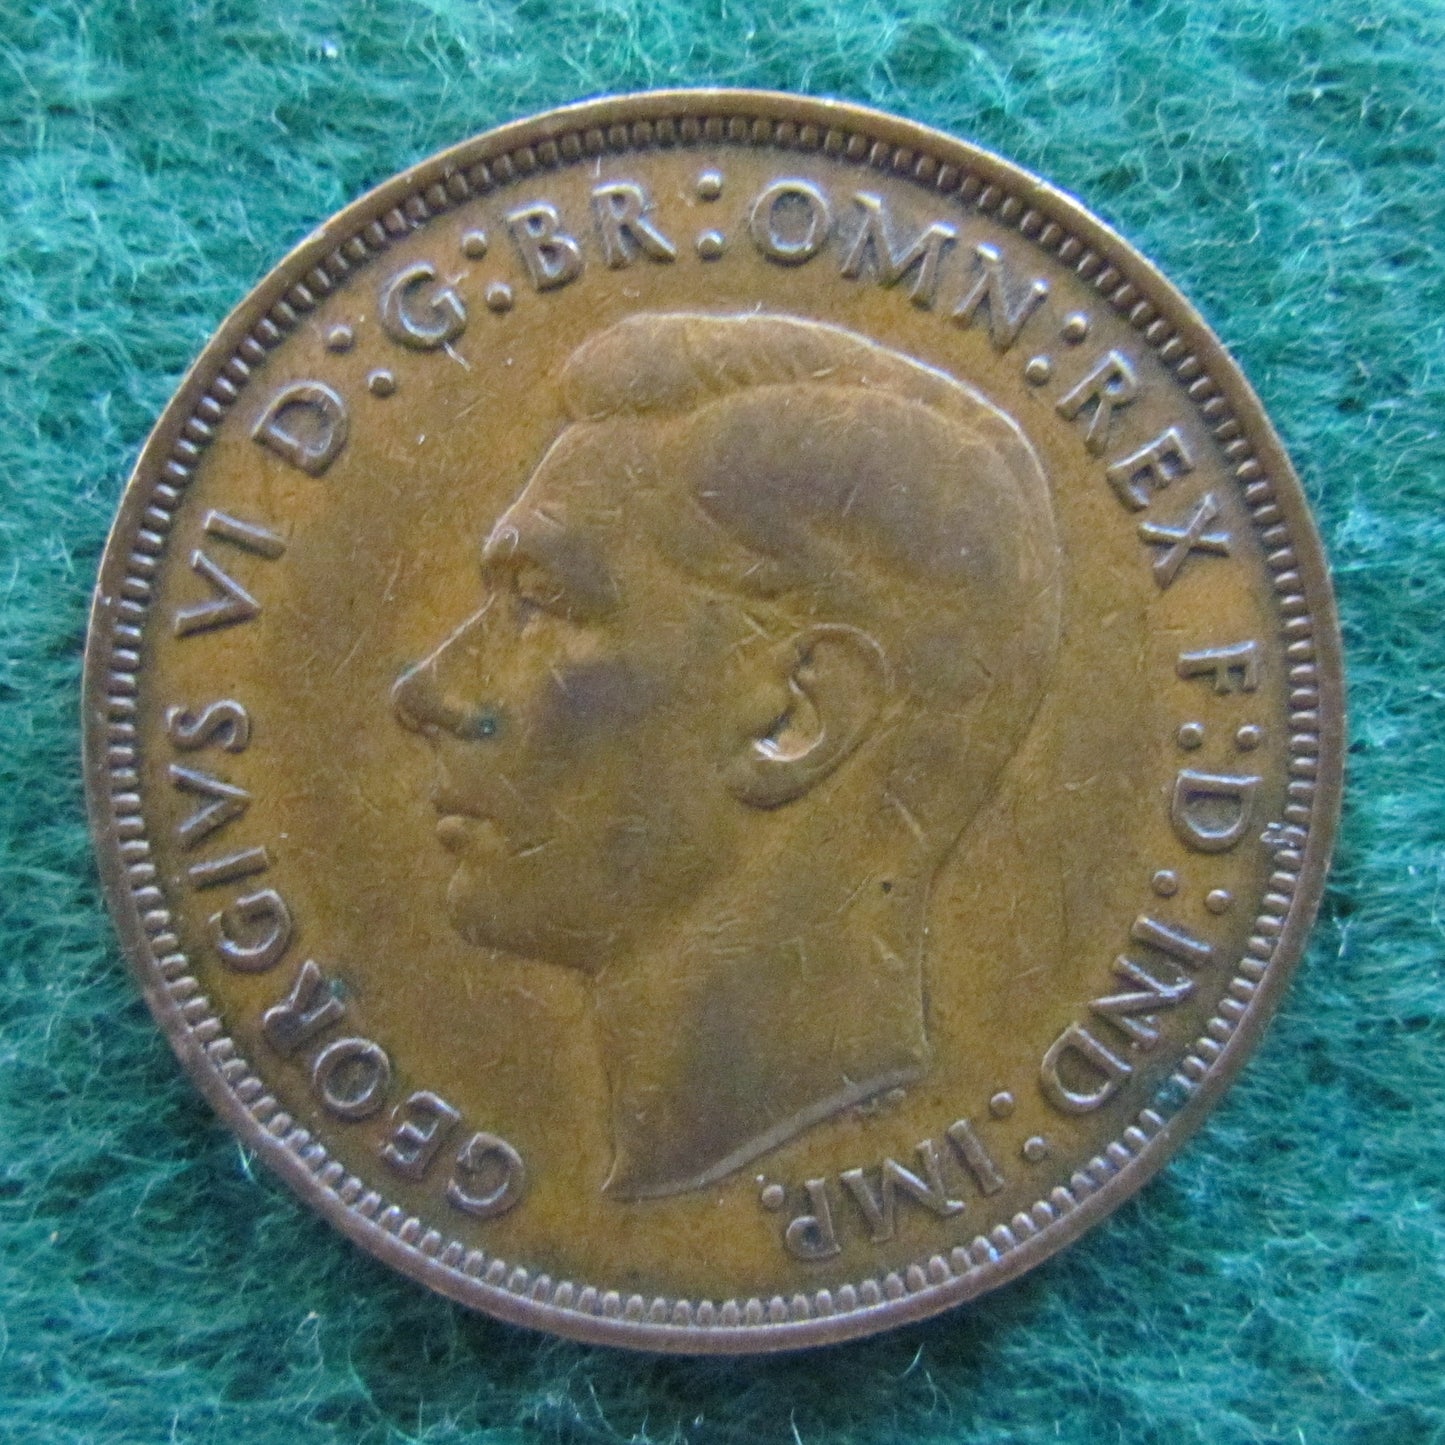 GB British UK English 1945 Penny King George VI Coin